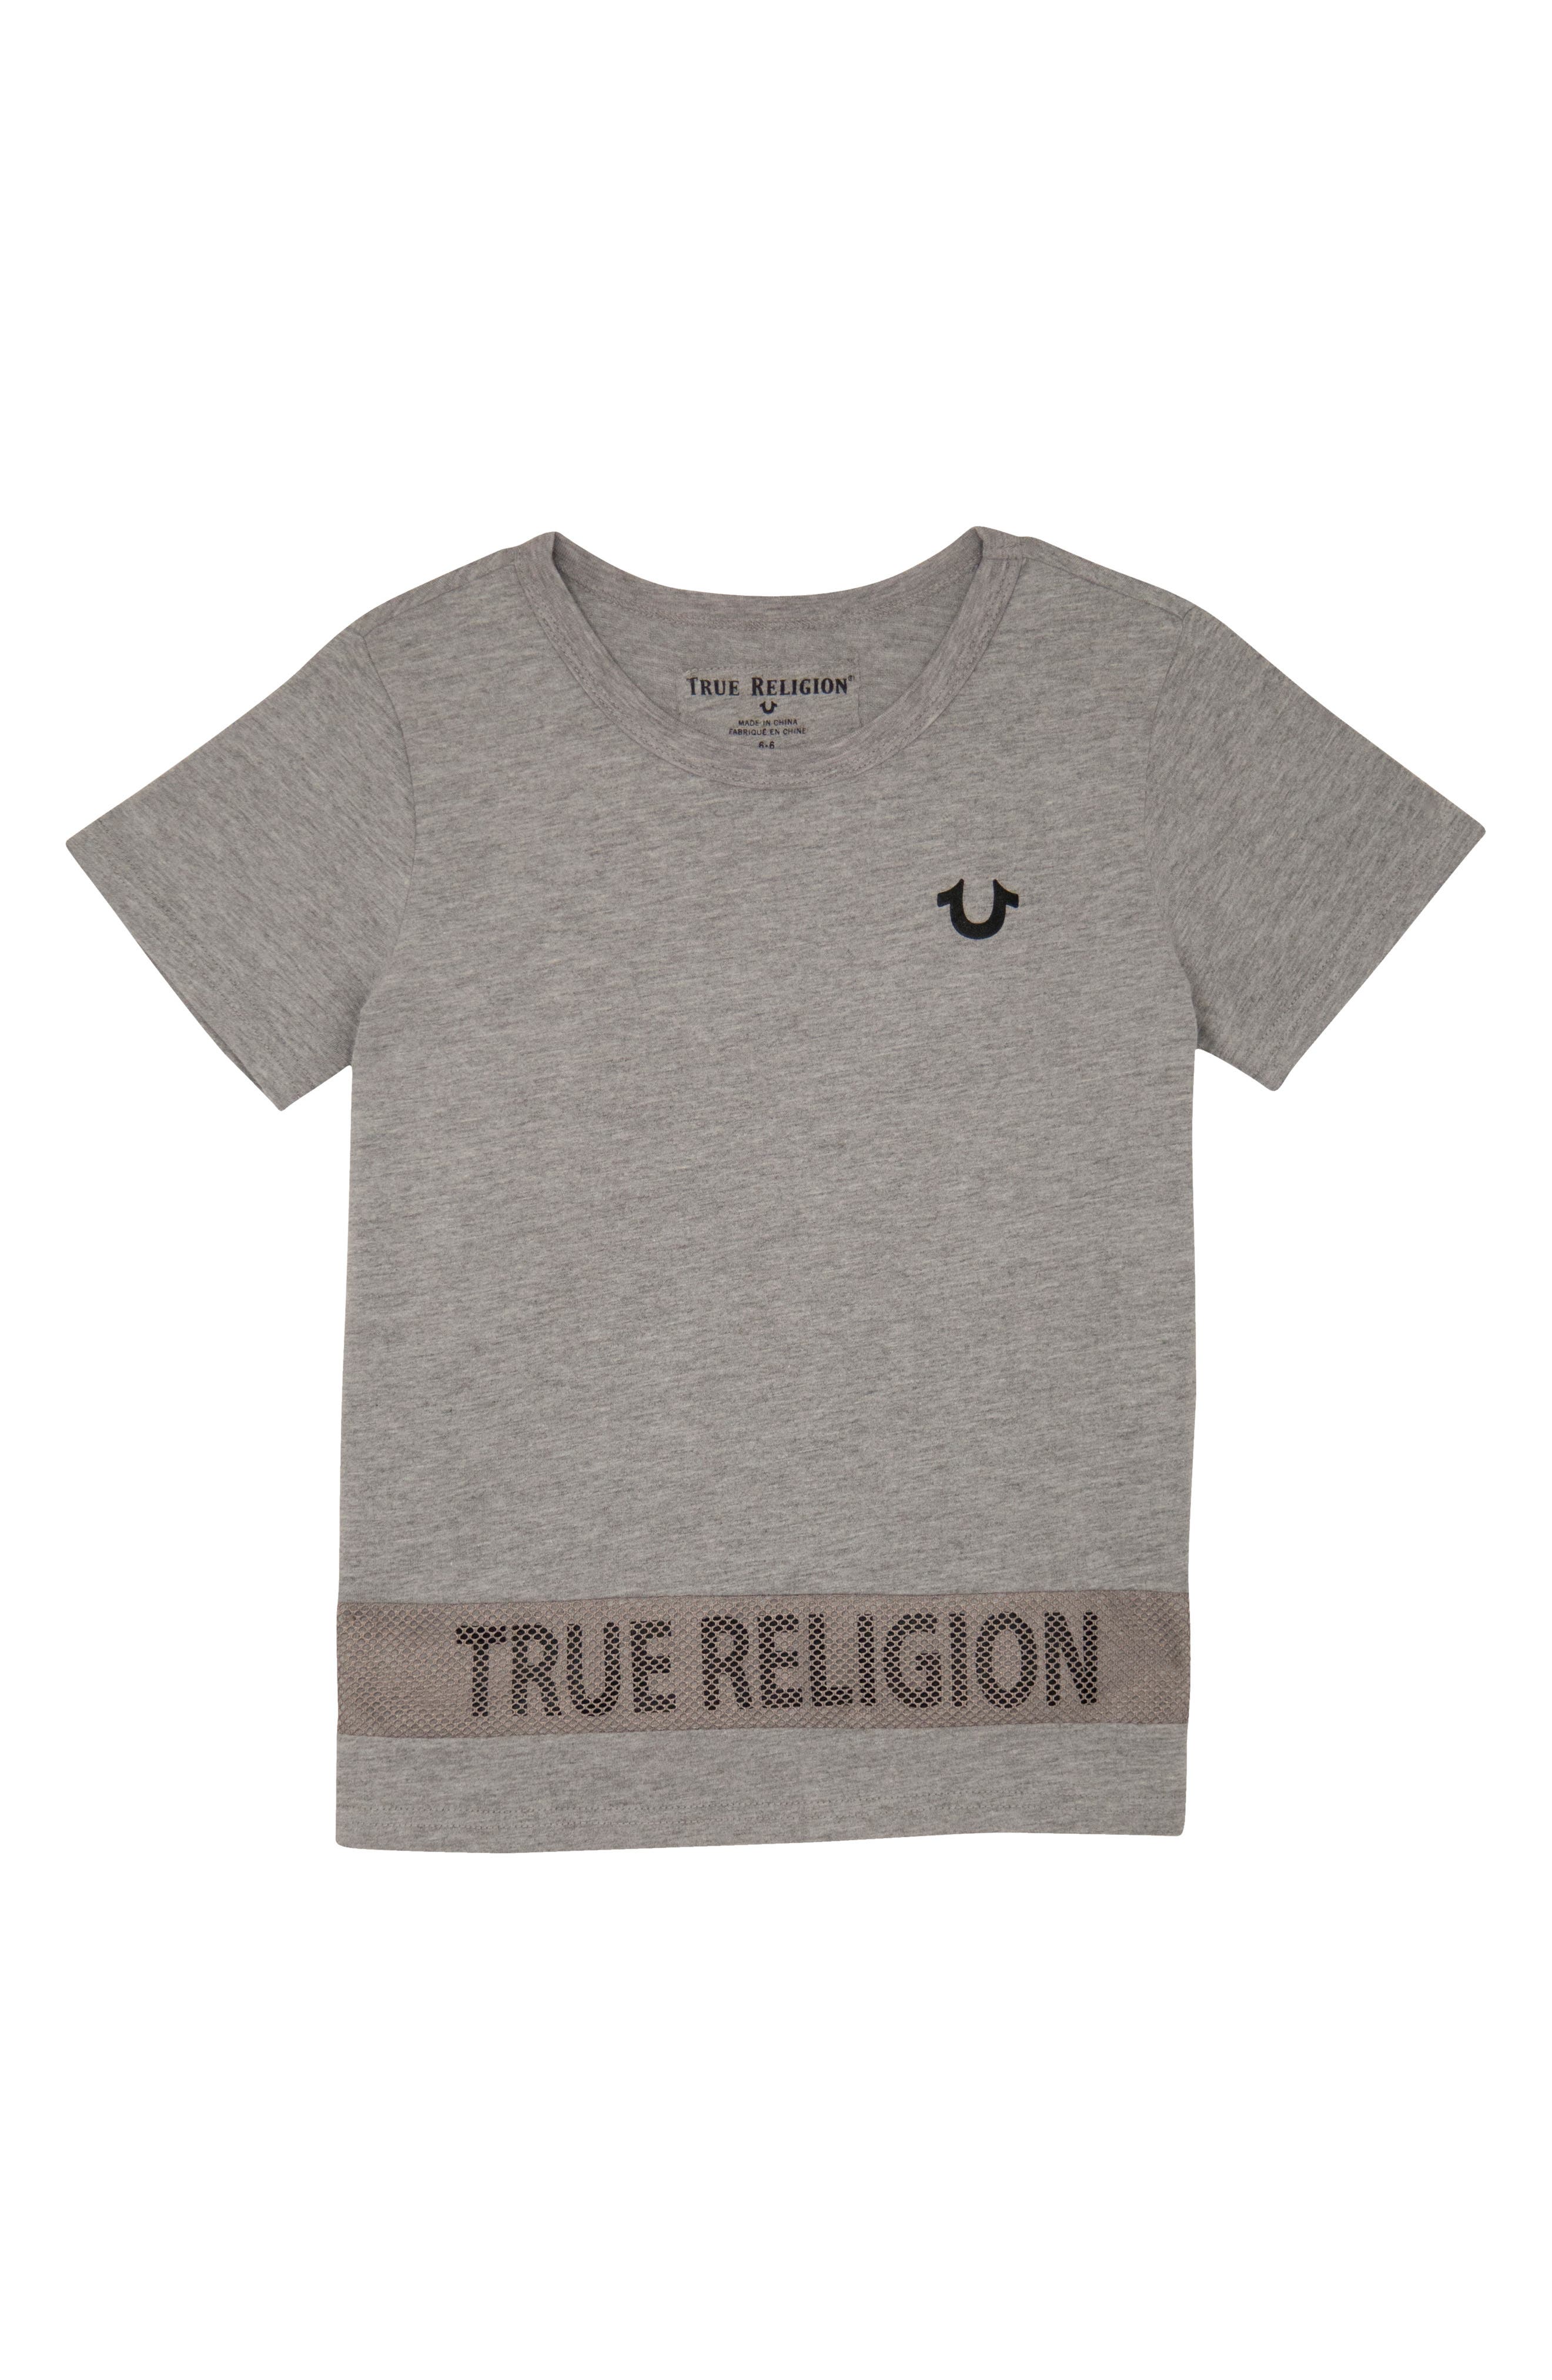 true religion toddler shirts